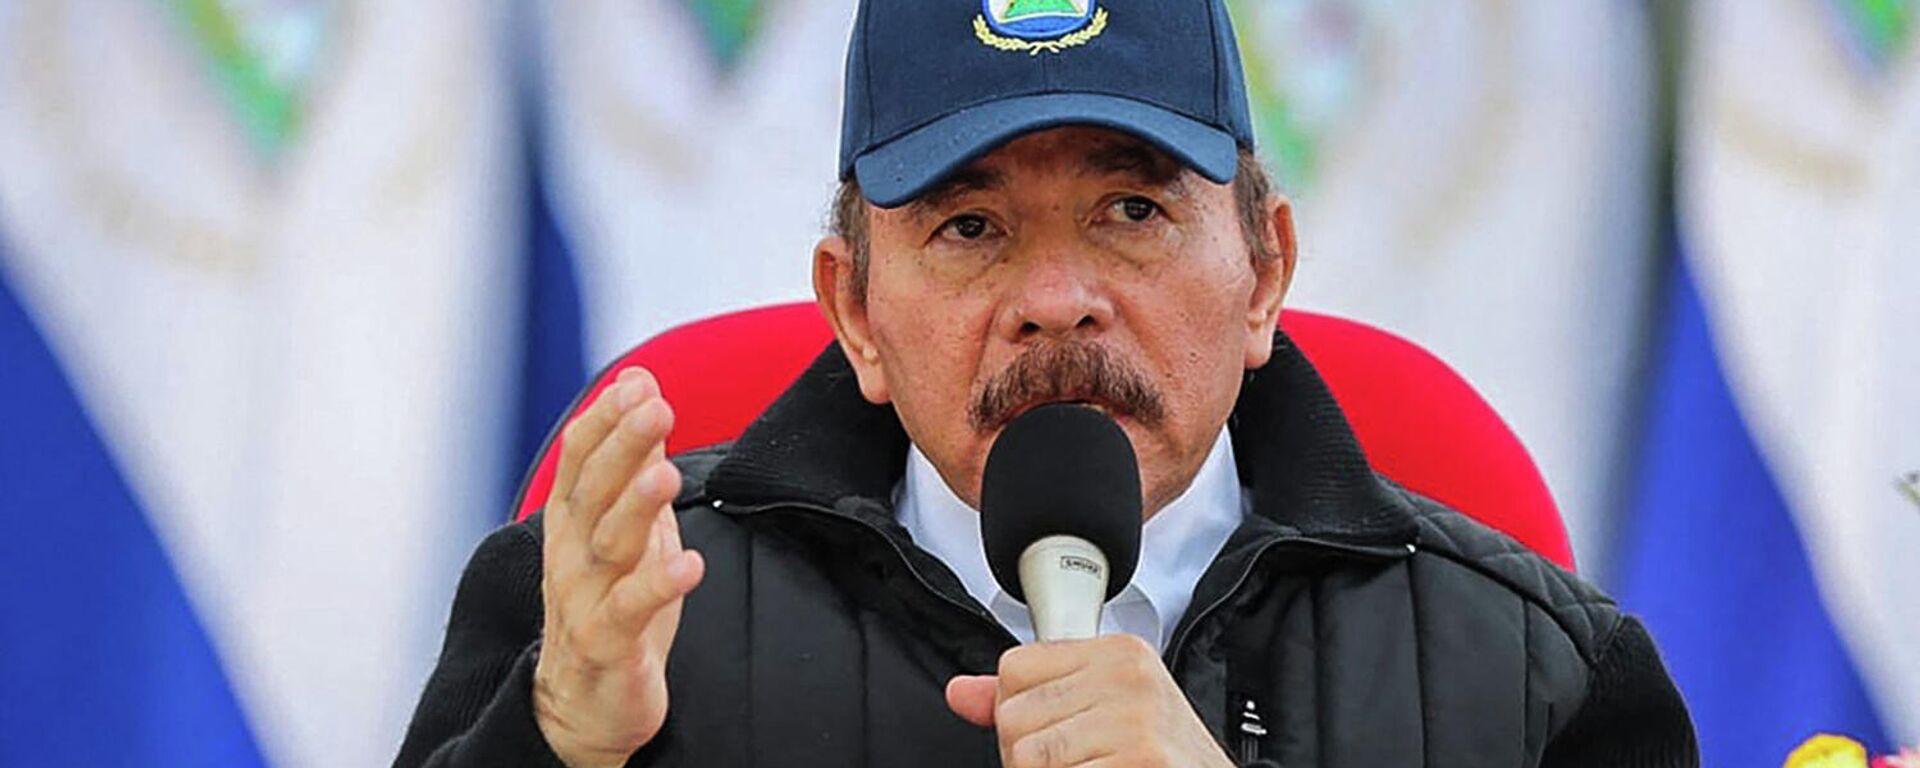 Daniel Ortega, presidente de Nicaragua - Sputnik Mundo, 1920, 17.12.2021